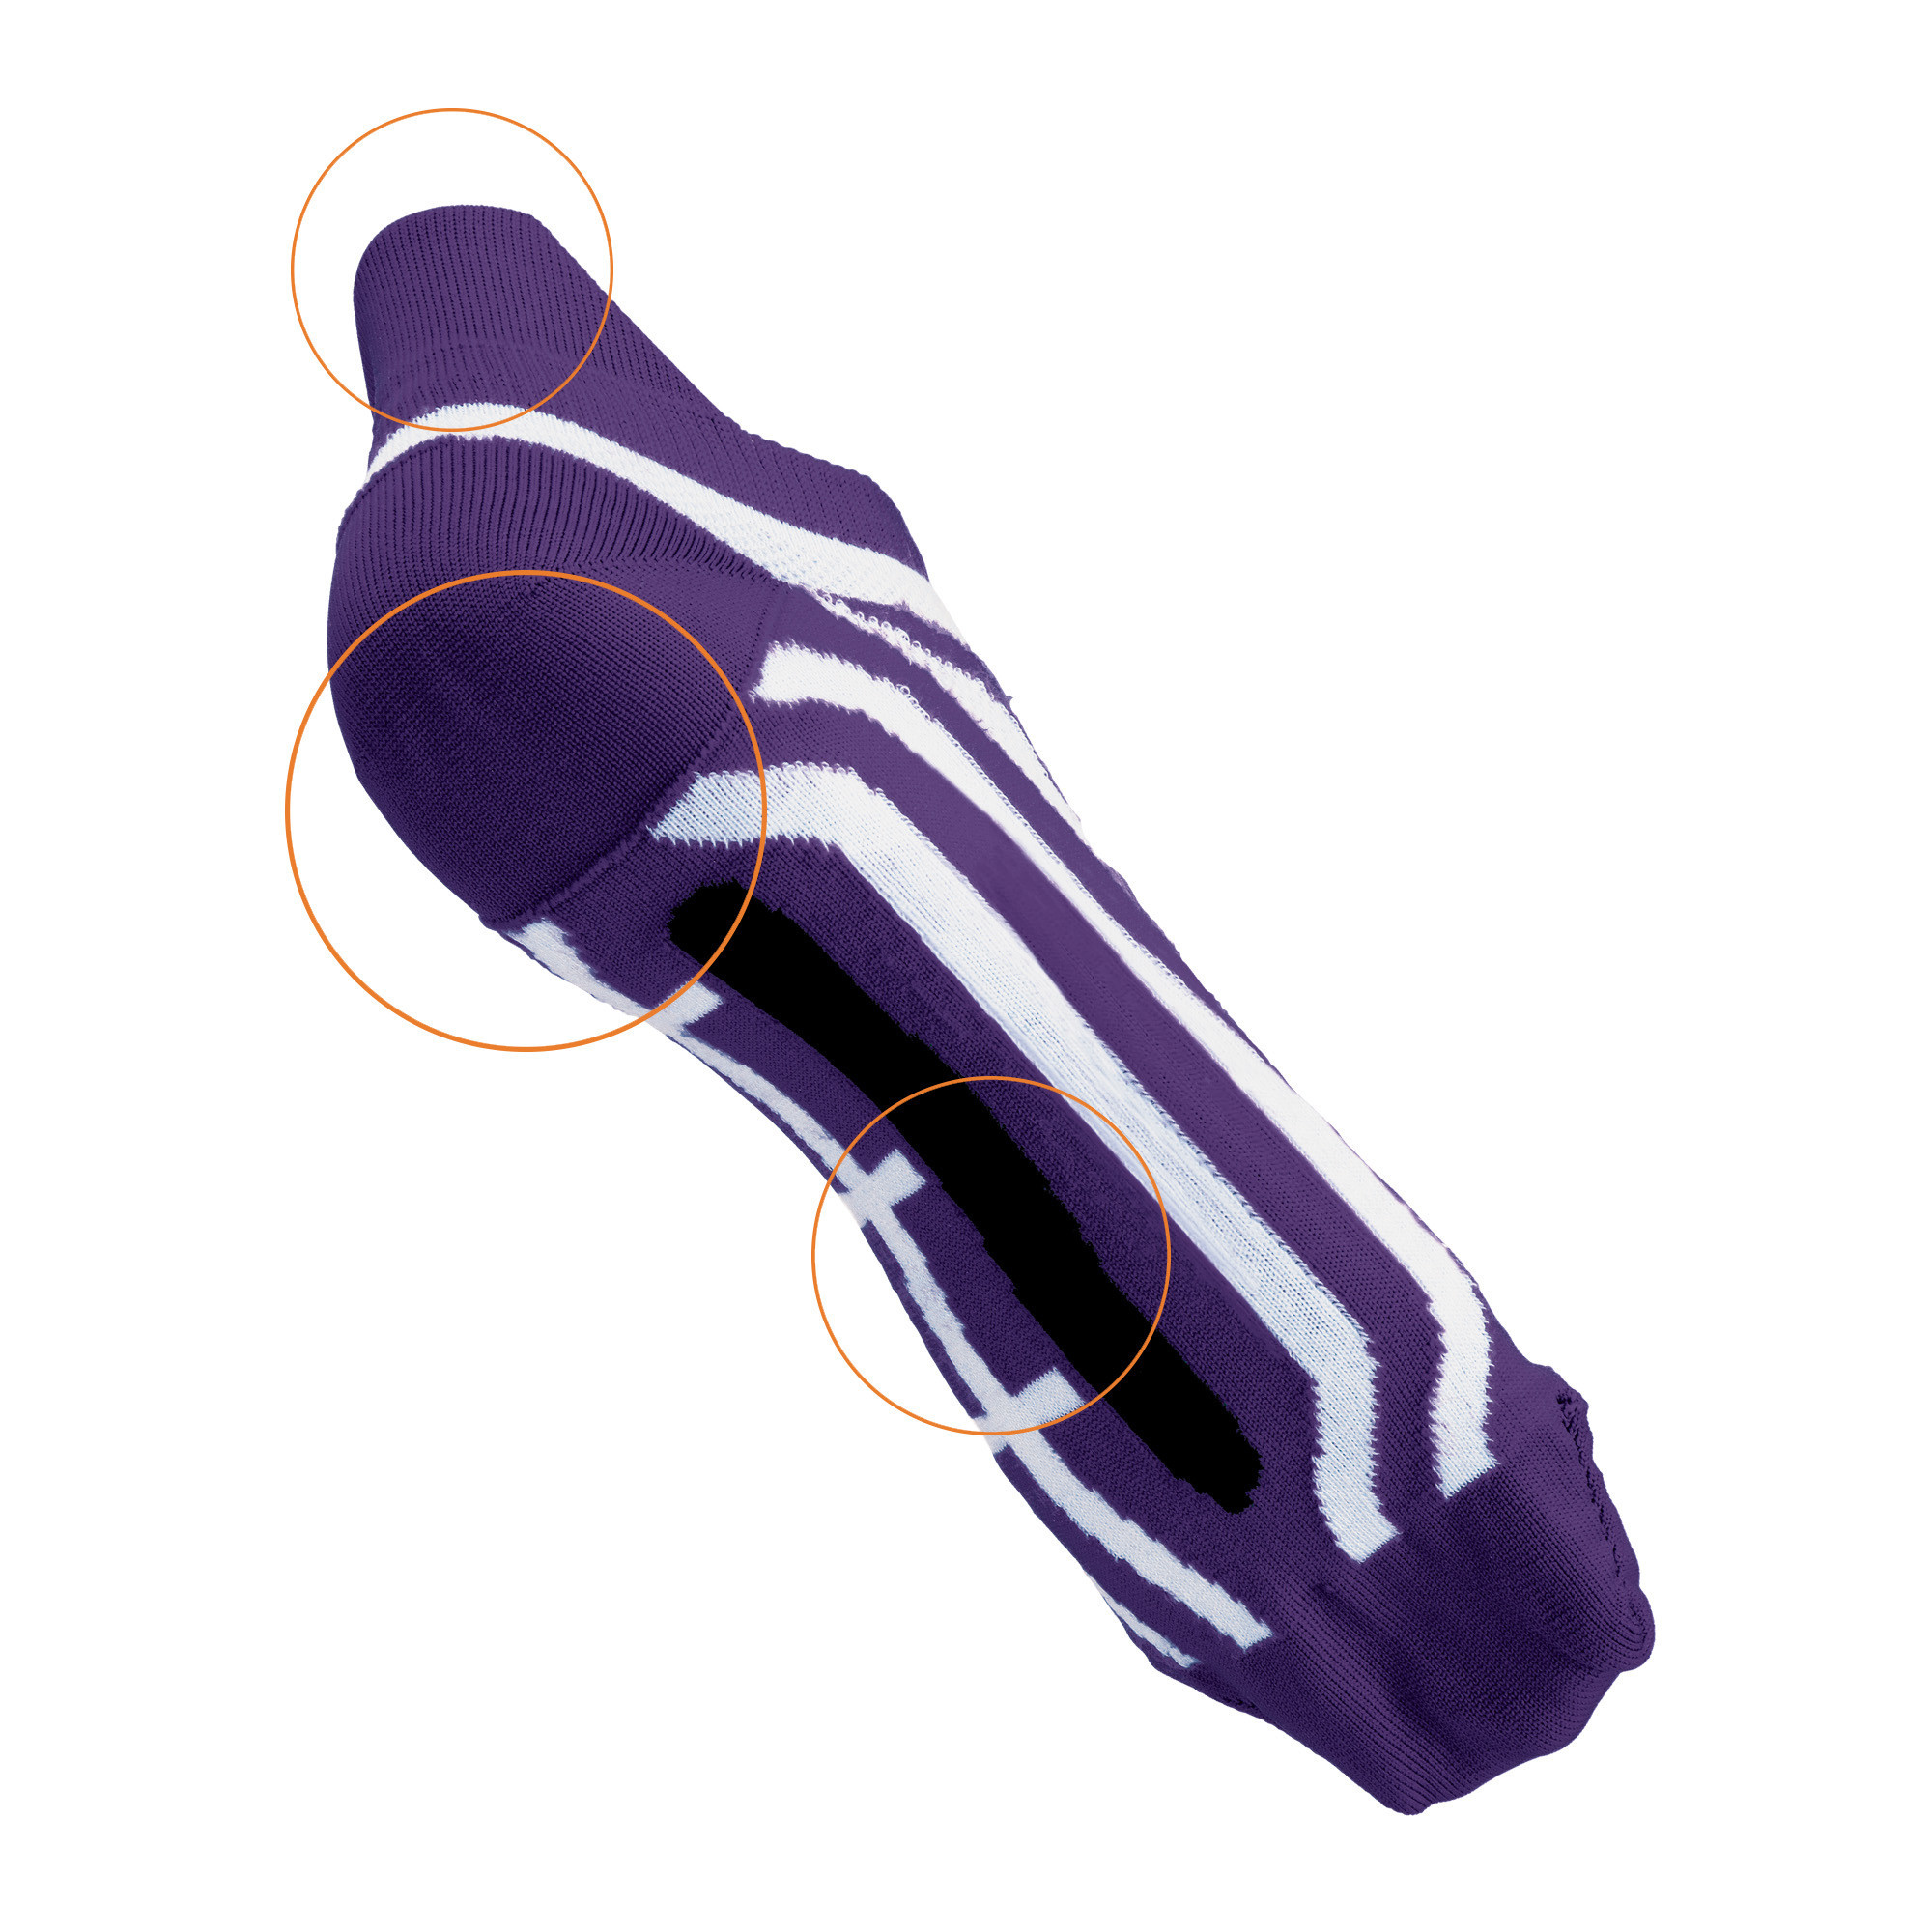 Professional Technical Socks Size Large violet